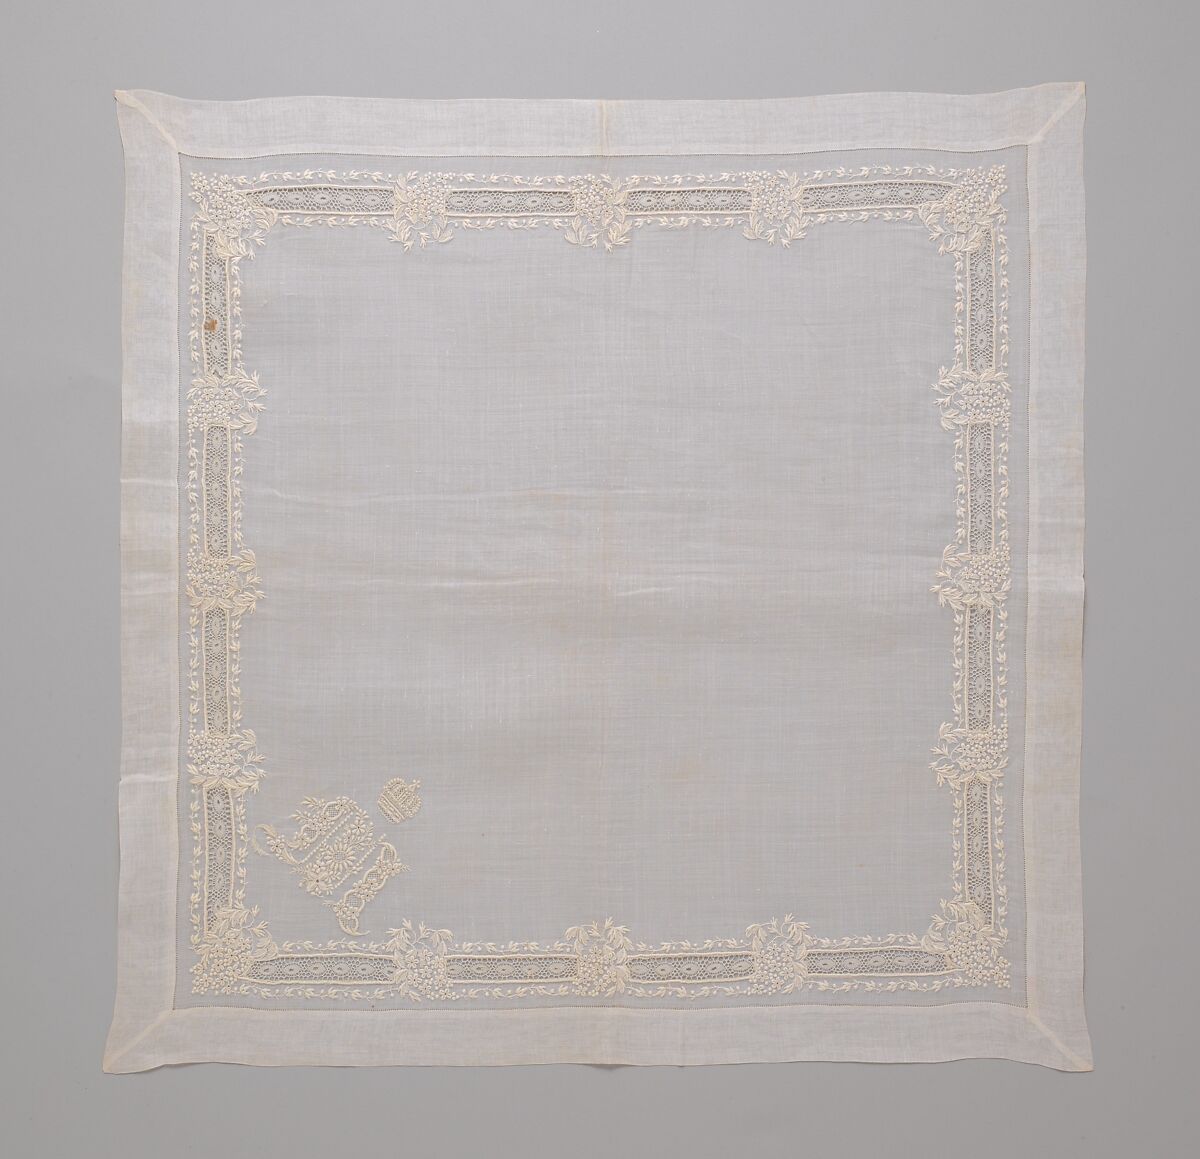 Dresser cloth, silk on linen, French or Swiss 